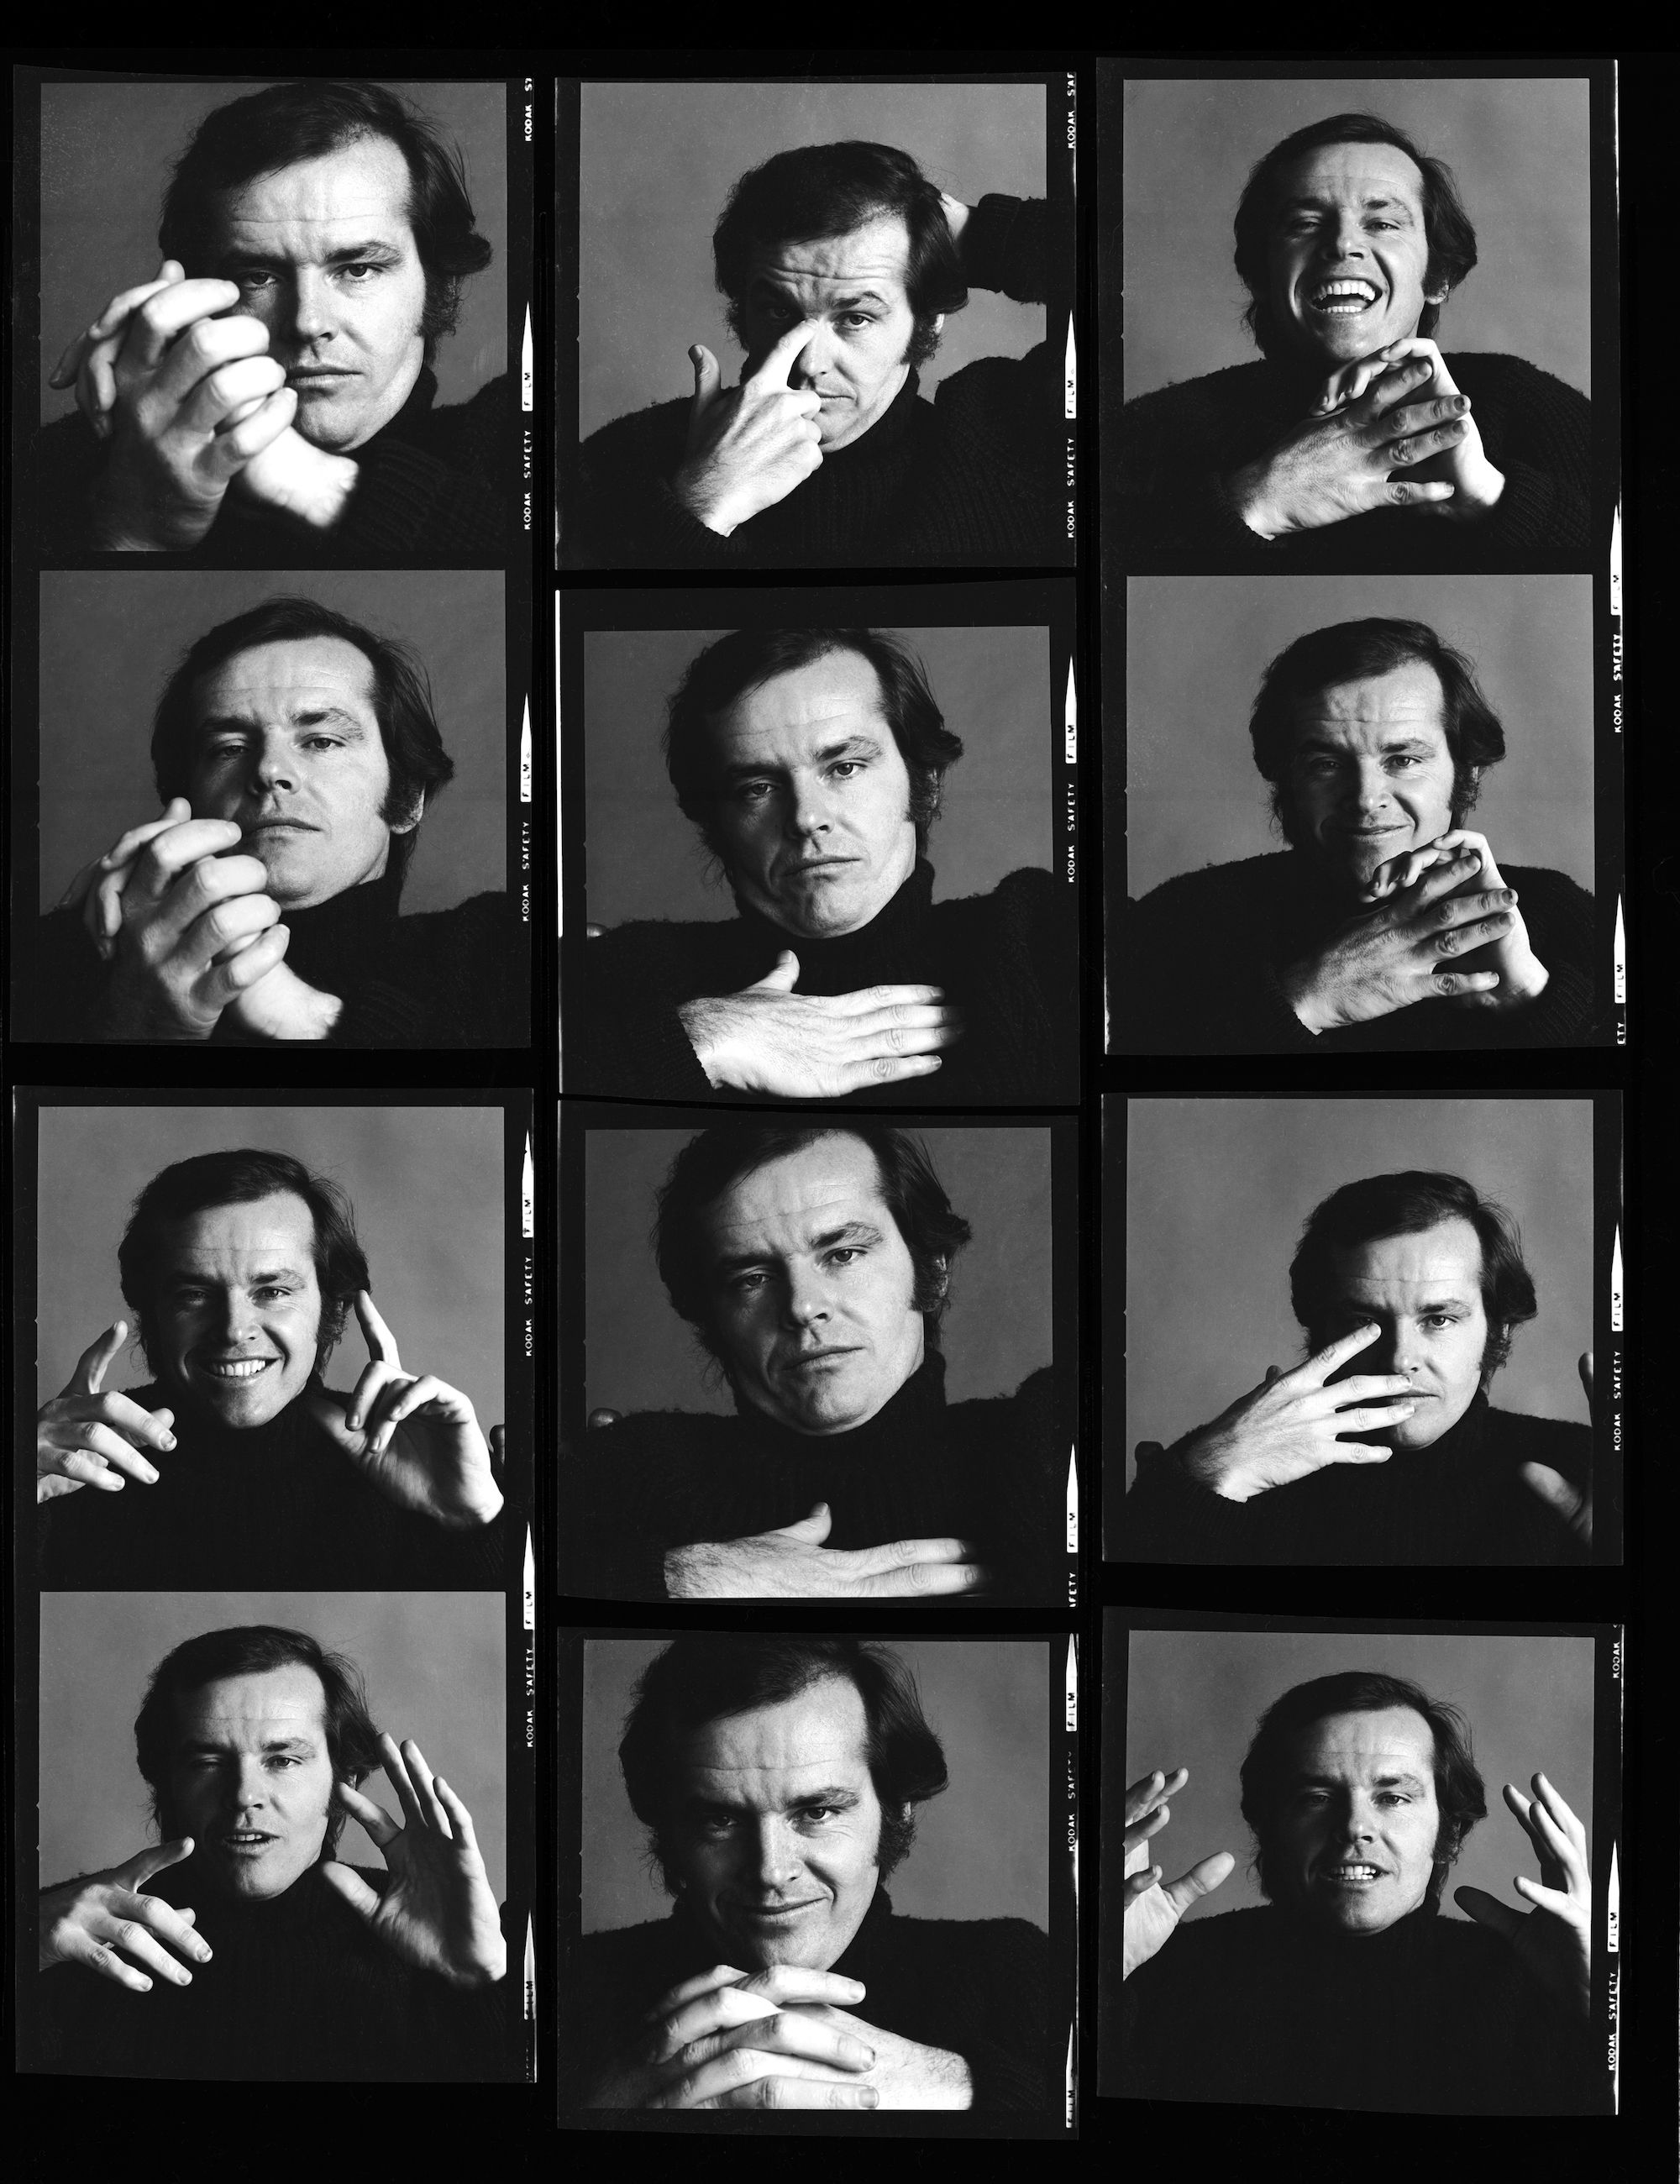 Jack Nicholson  Jack nicholson, Jack nicholson the shining, Nicholson